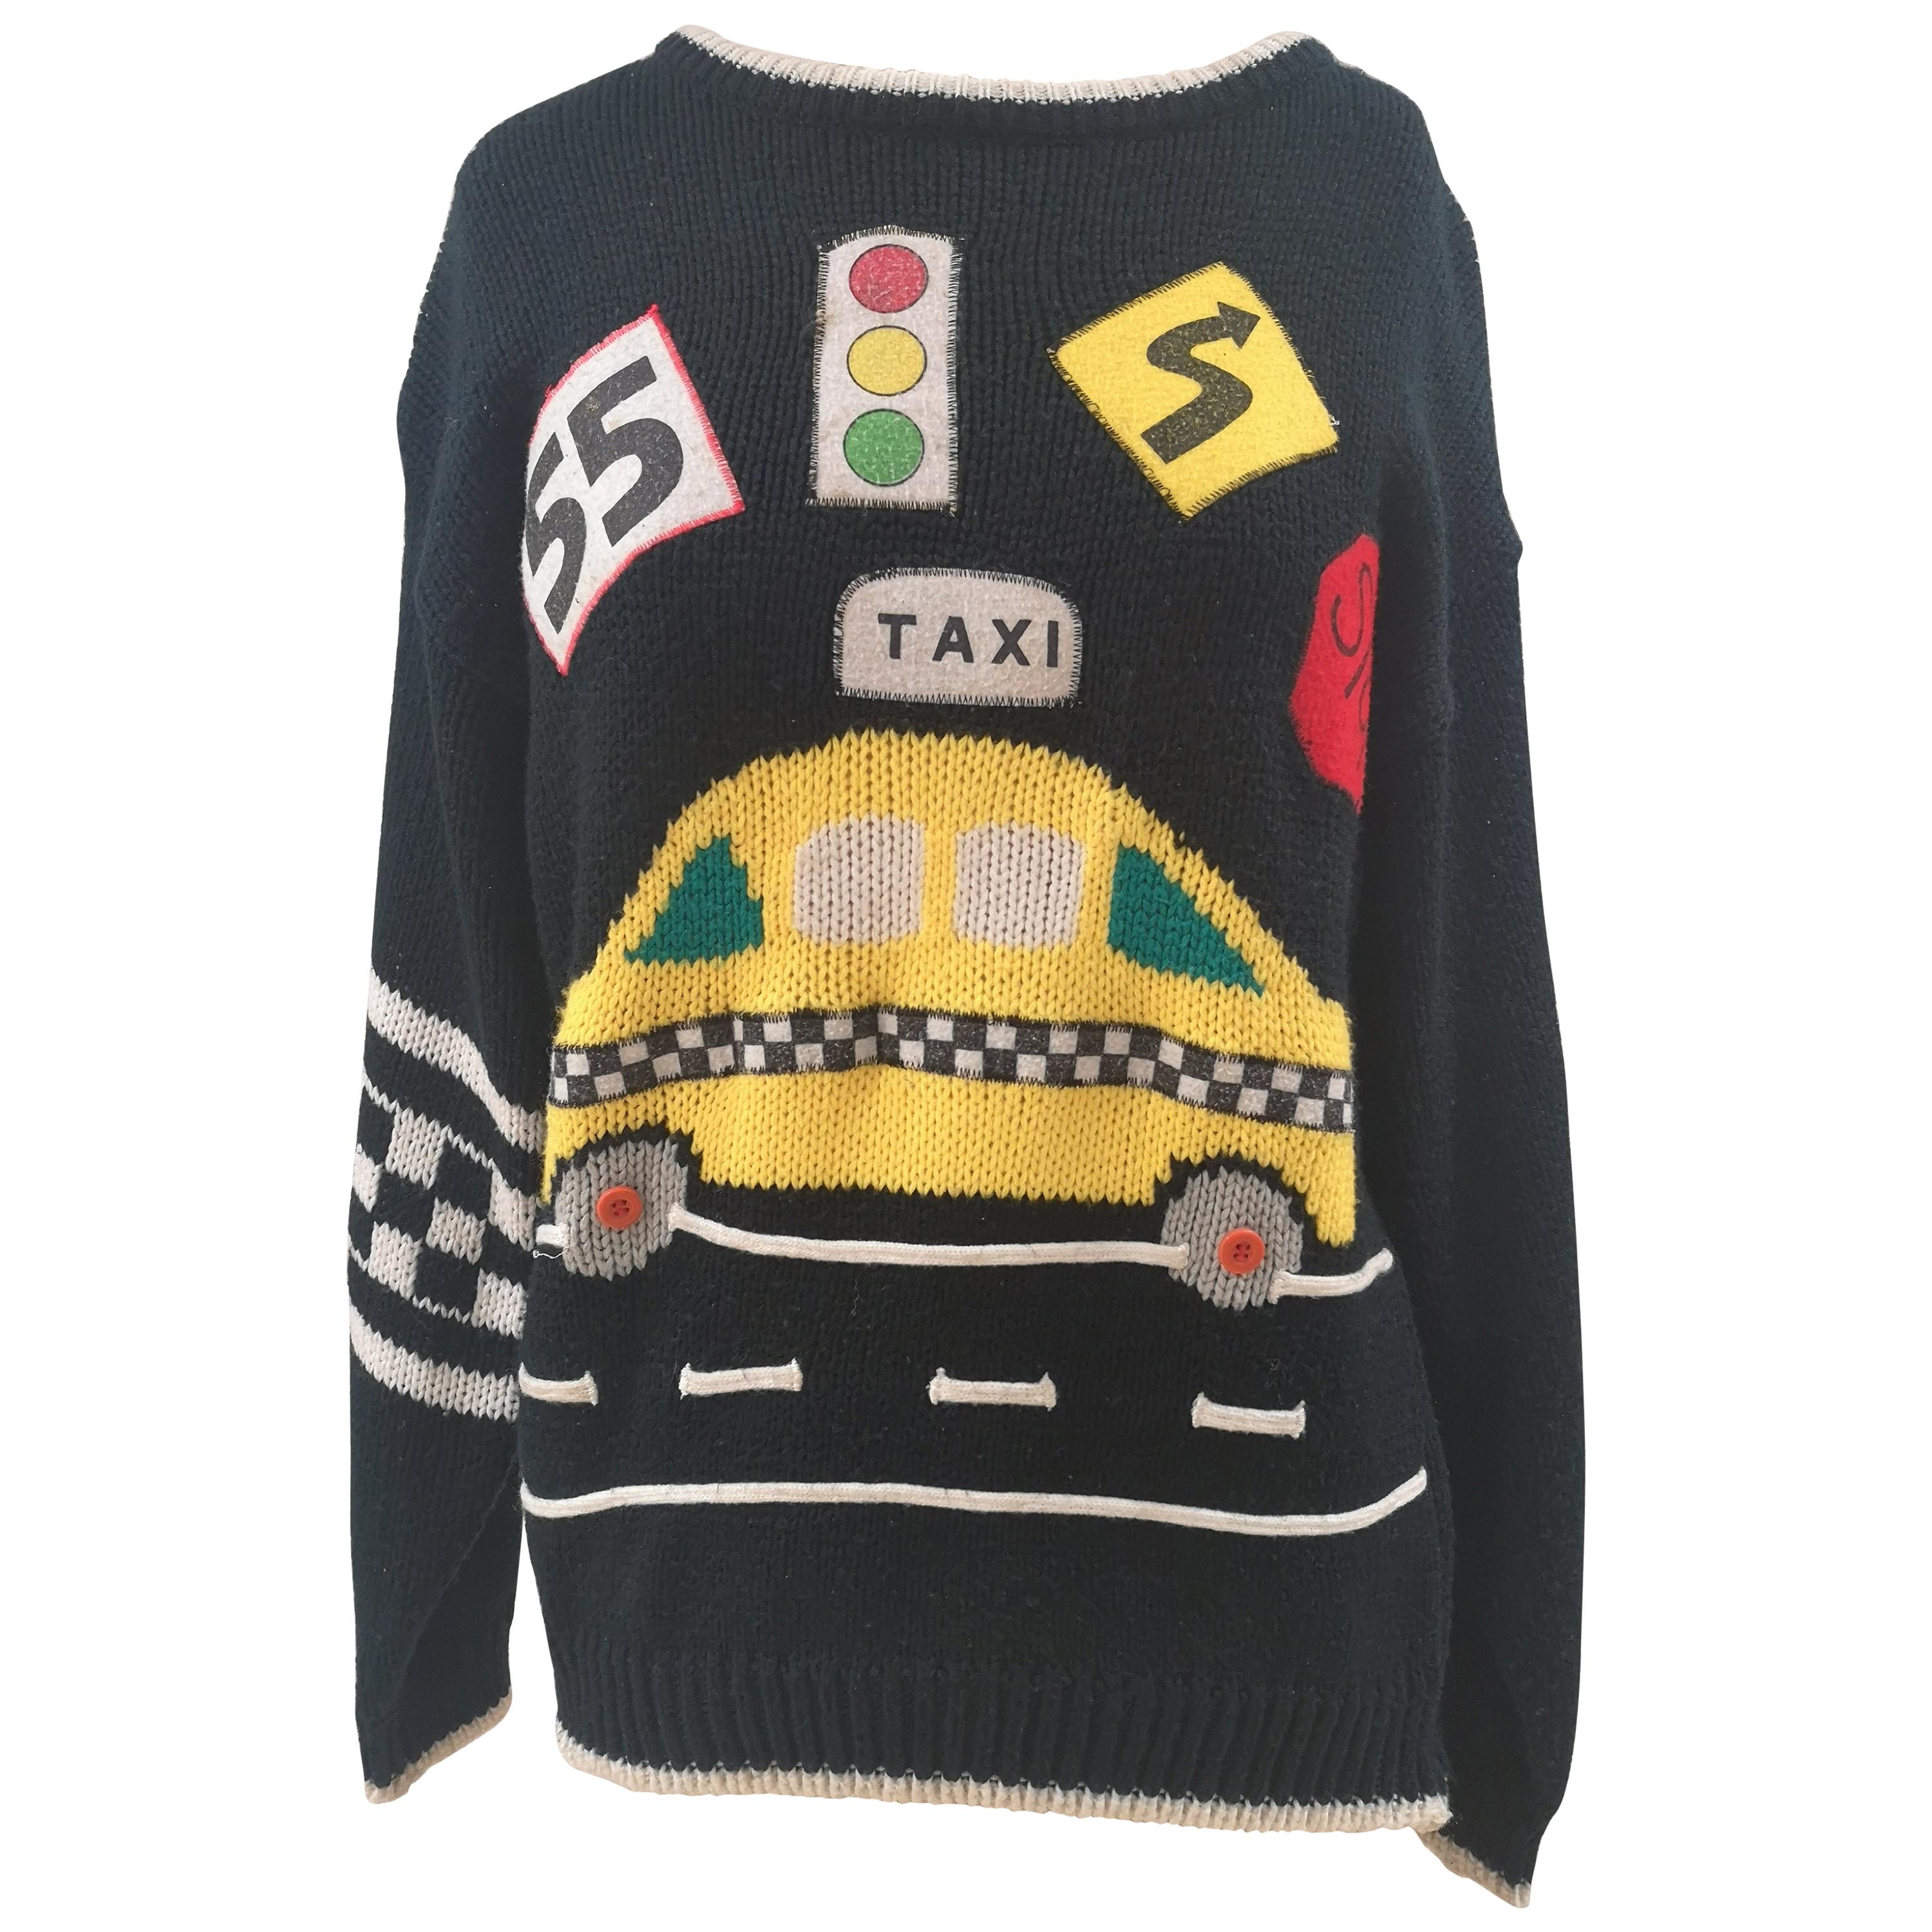 Black wool taxi sweater / pull